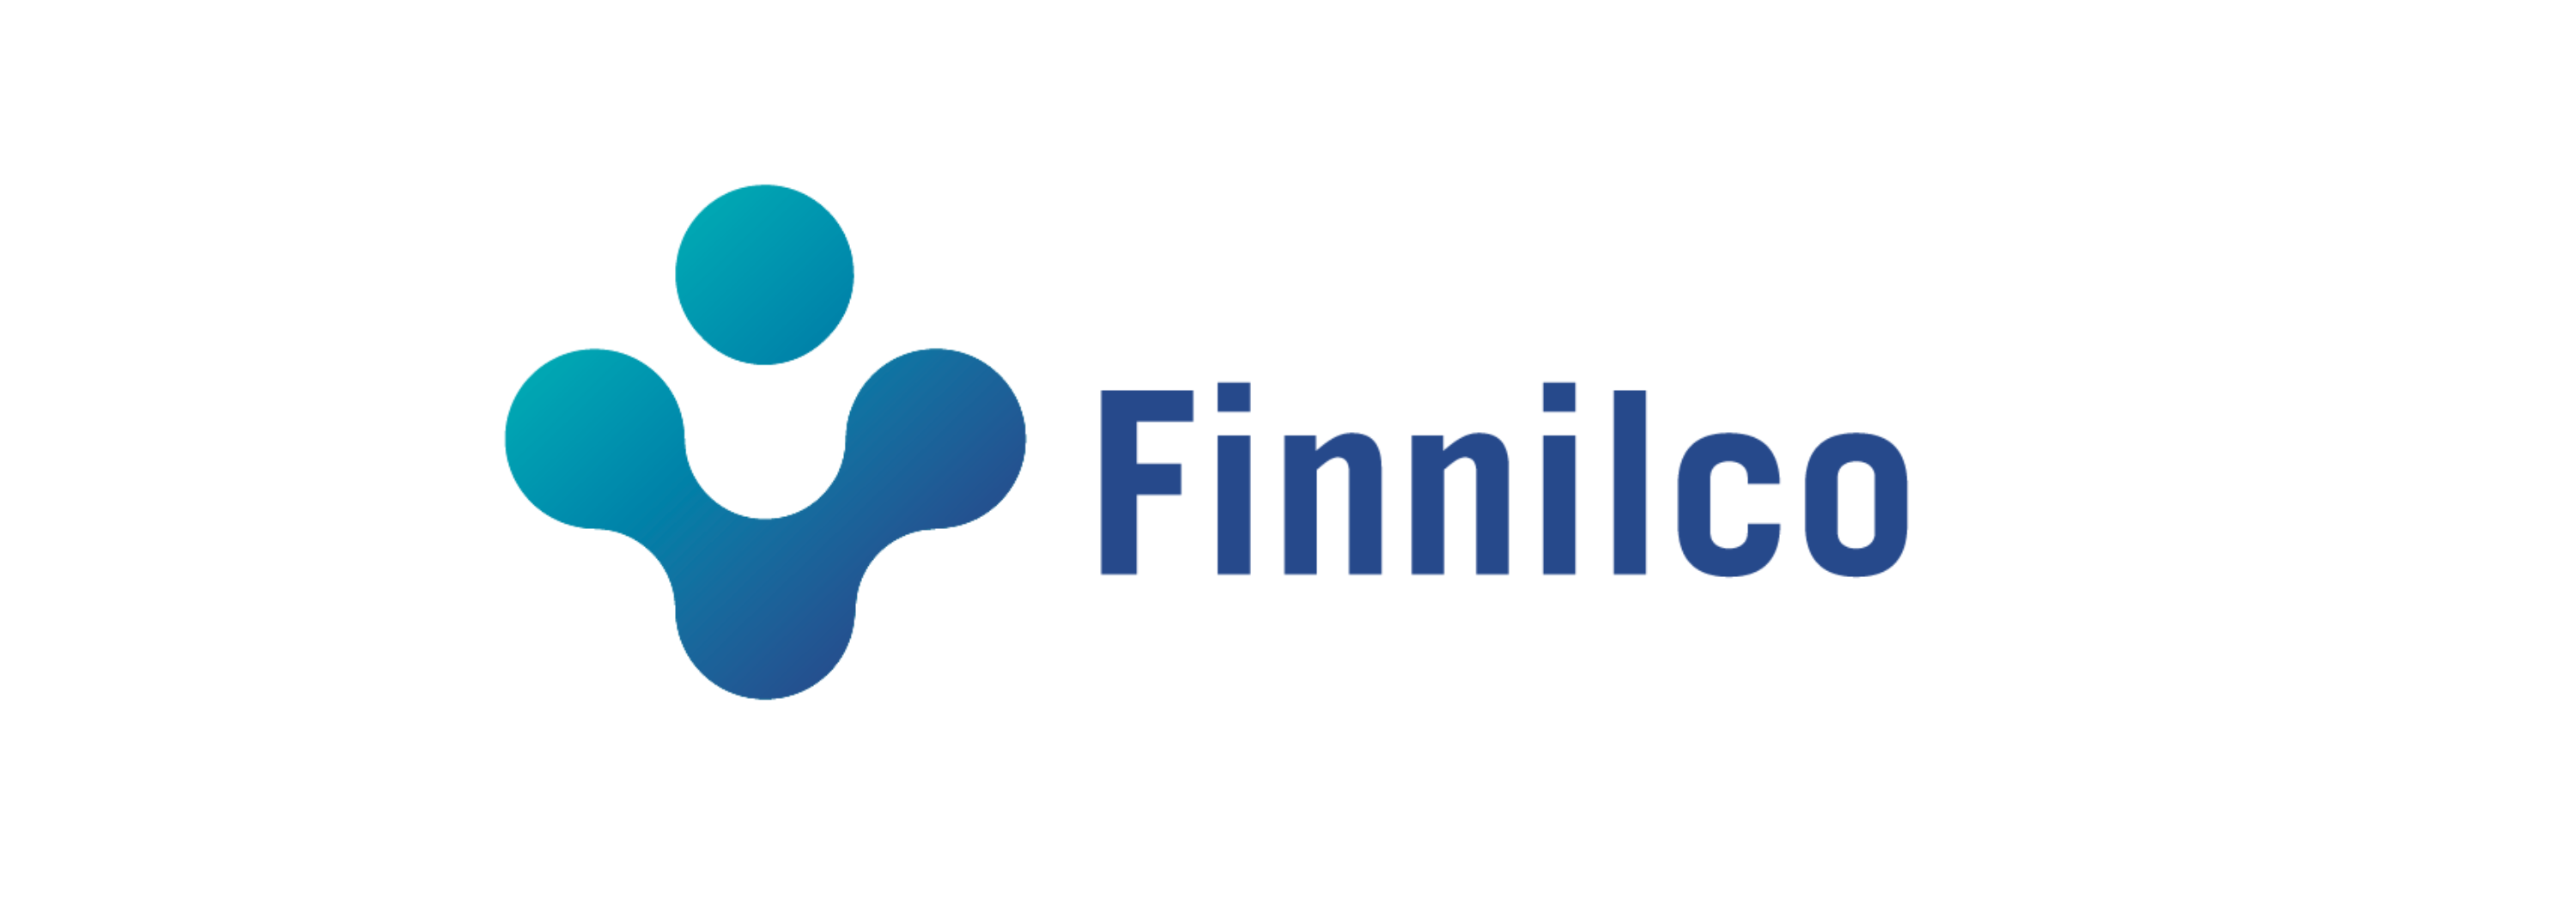 Jrjestn Finnilco ry logo